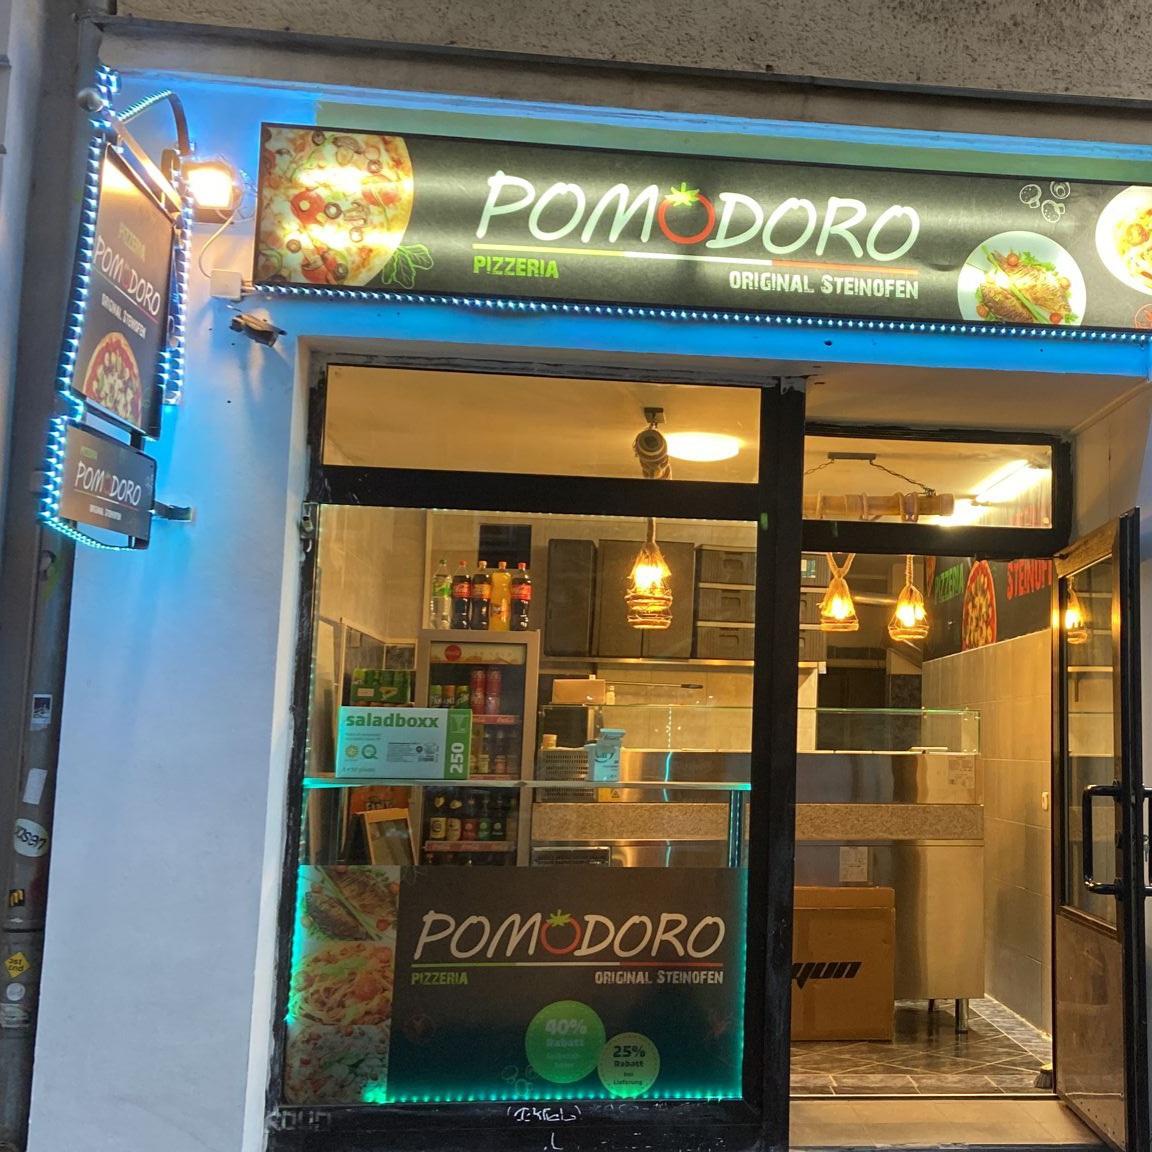 Restaurant "Pizzeria Pomodoro" in Leipzig